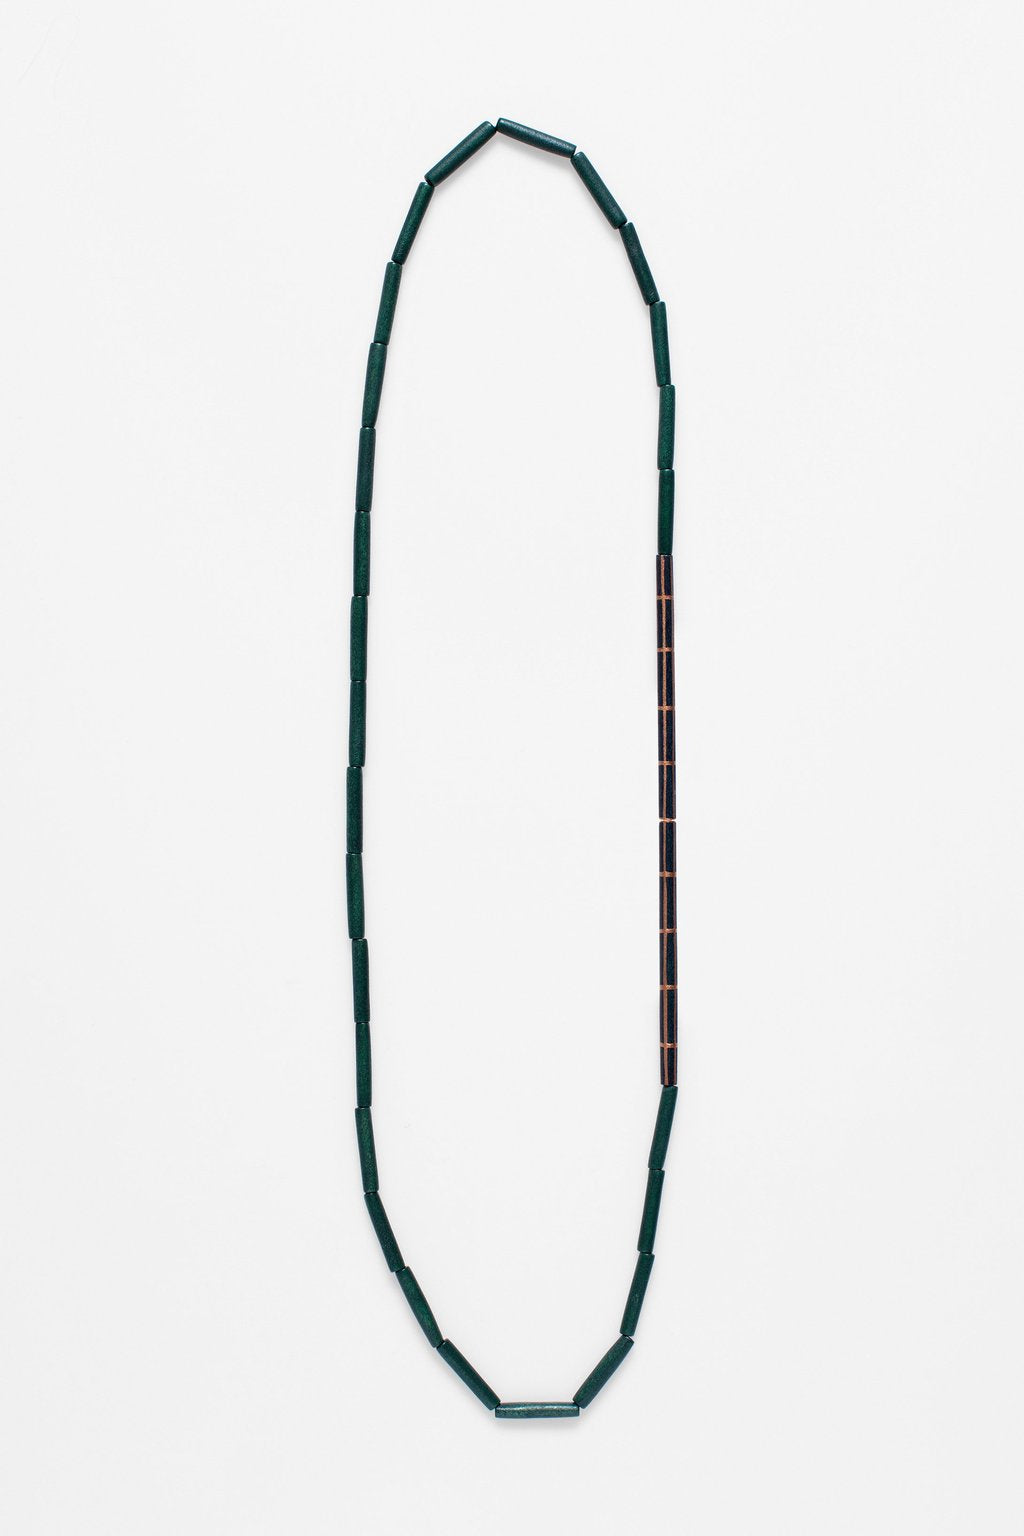 Elk Jewellery – Wanda Harland